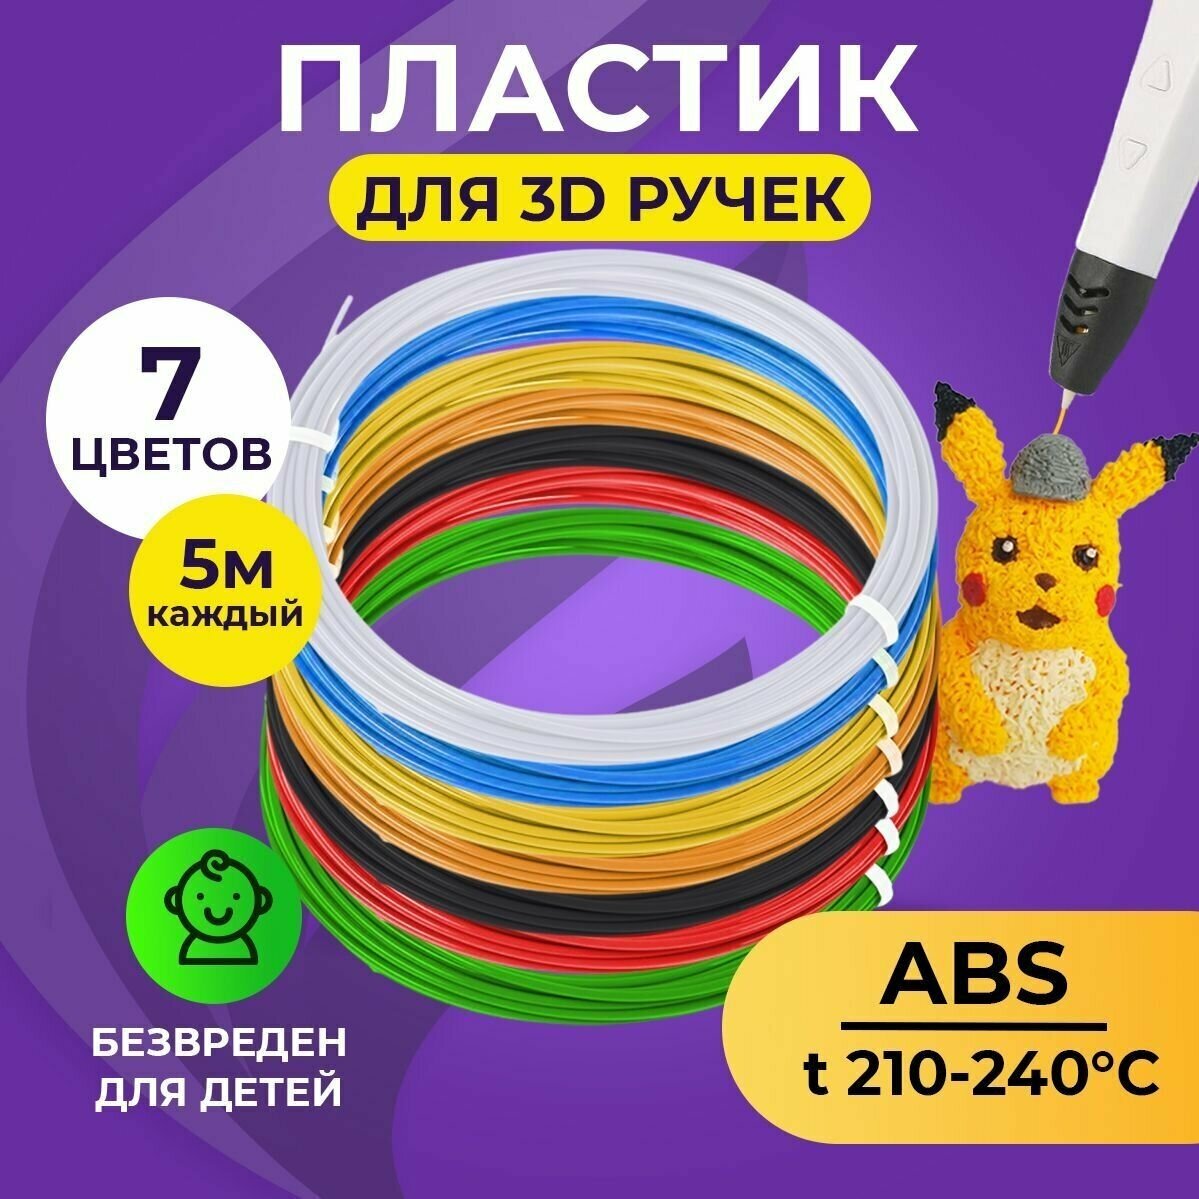 Набор ABS пластика для 3D ручек (7 цветов по 5 метров) Funtasy / картриджи для 3д ручки , стержни для 3д ручки абс